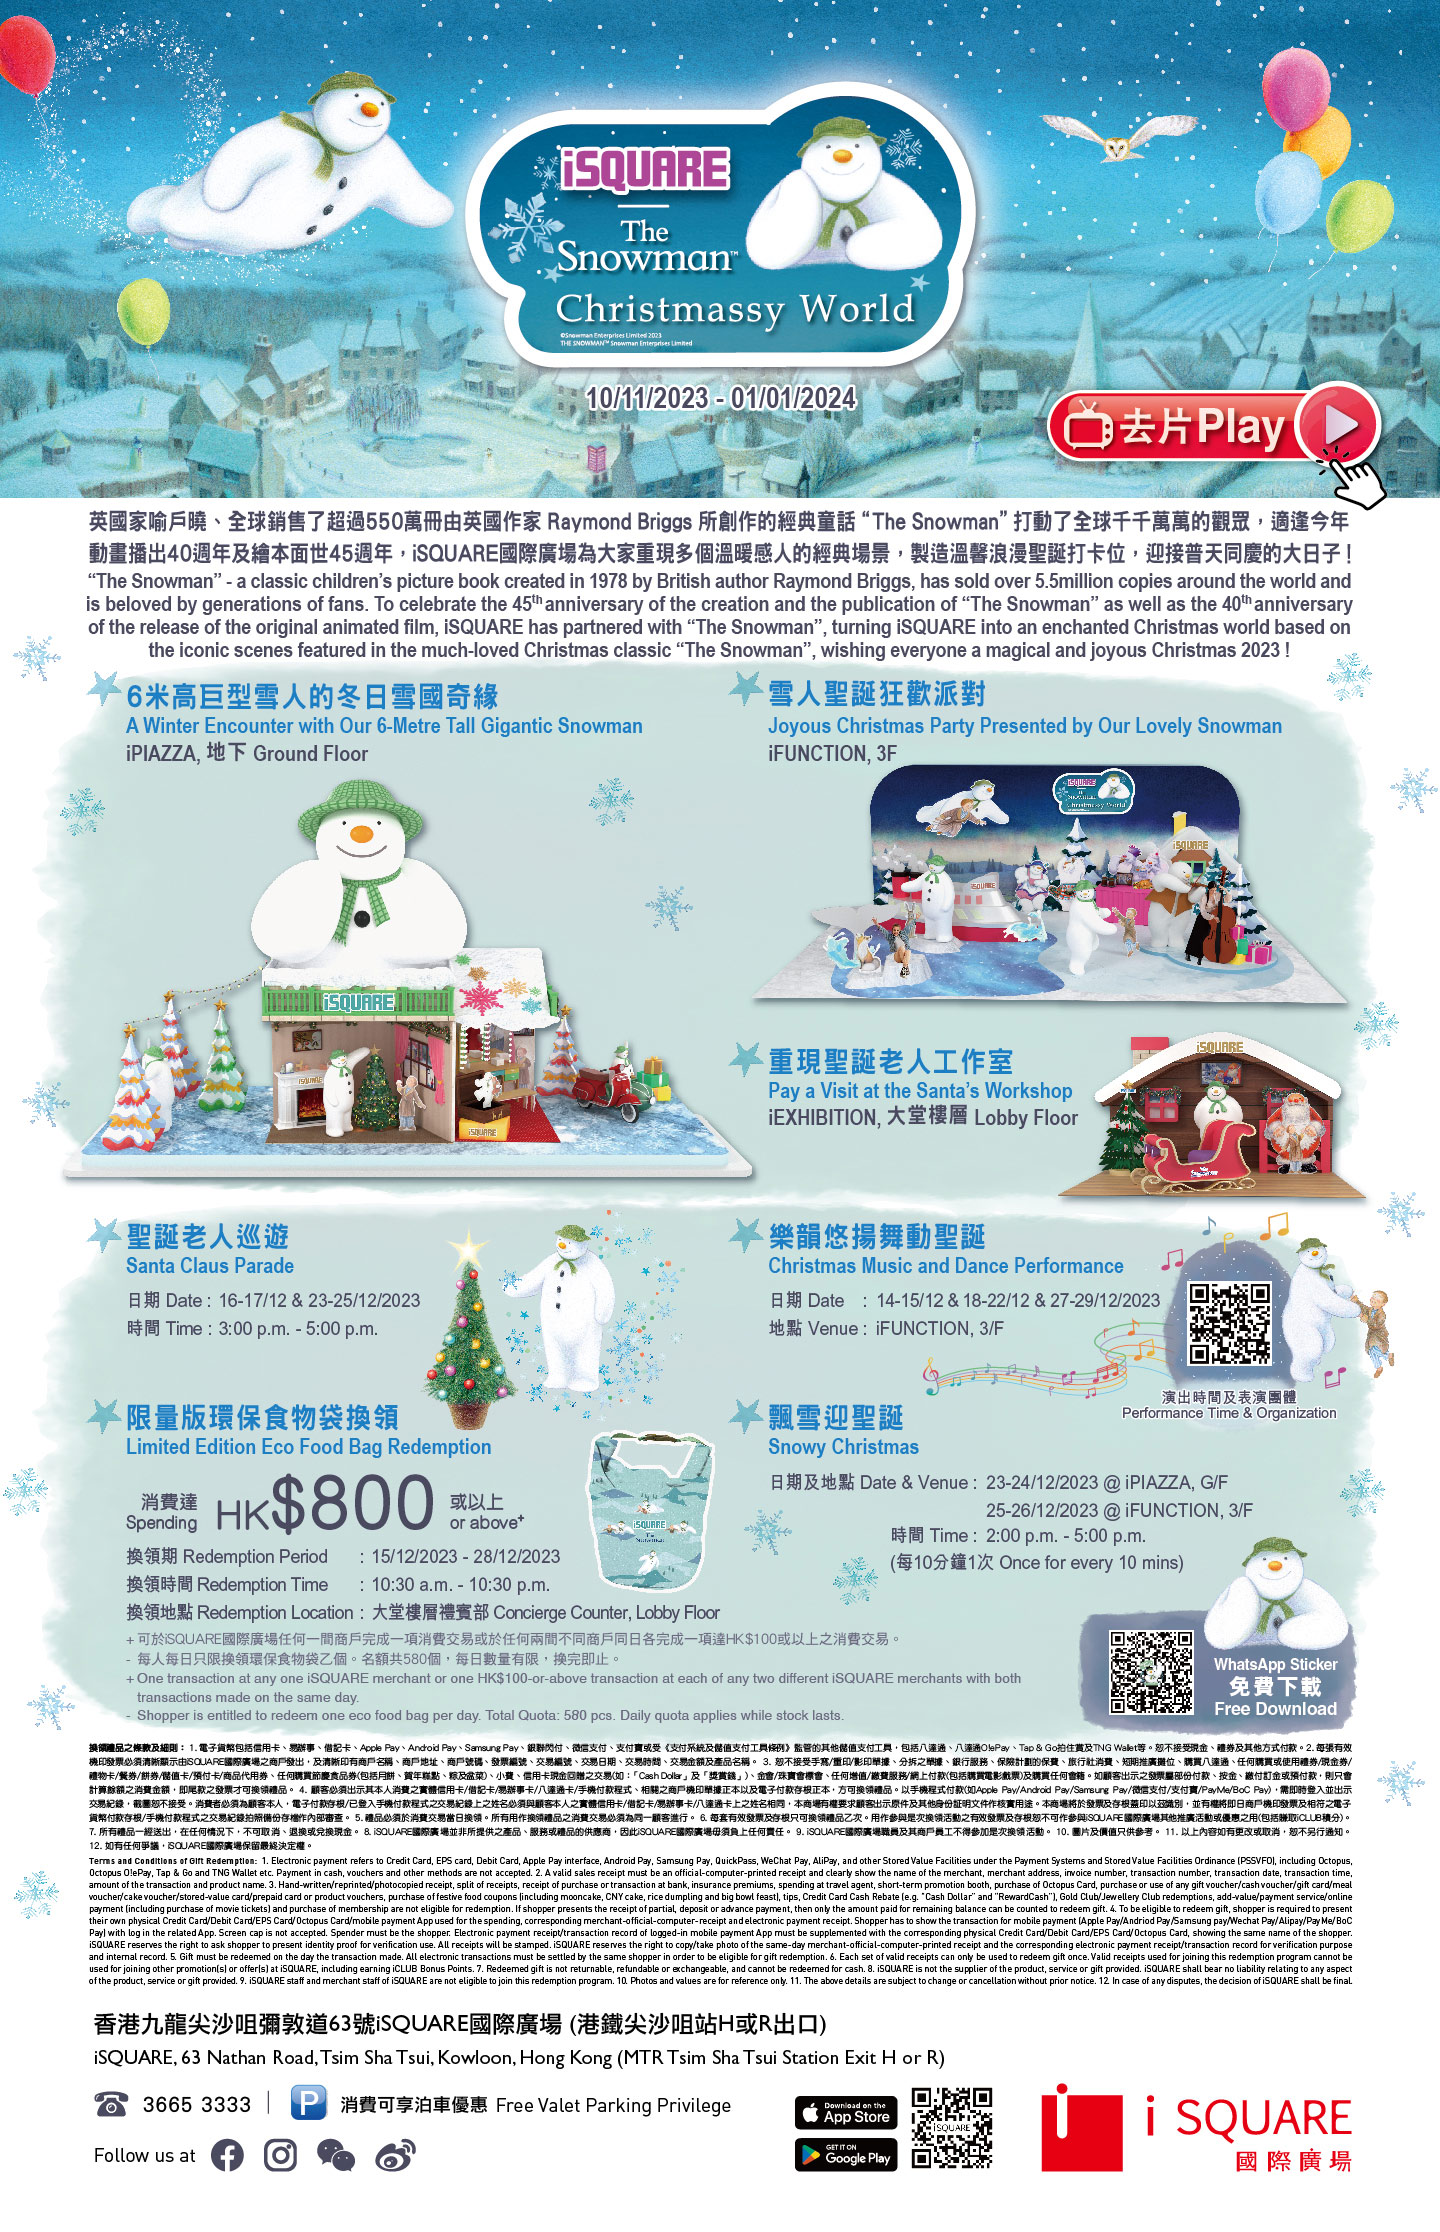 The Snowman “Christmassy World” 6米高巨型雪人飄雪迎聖誕